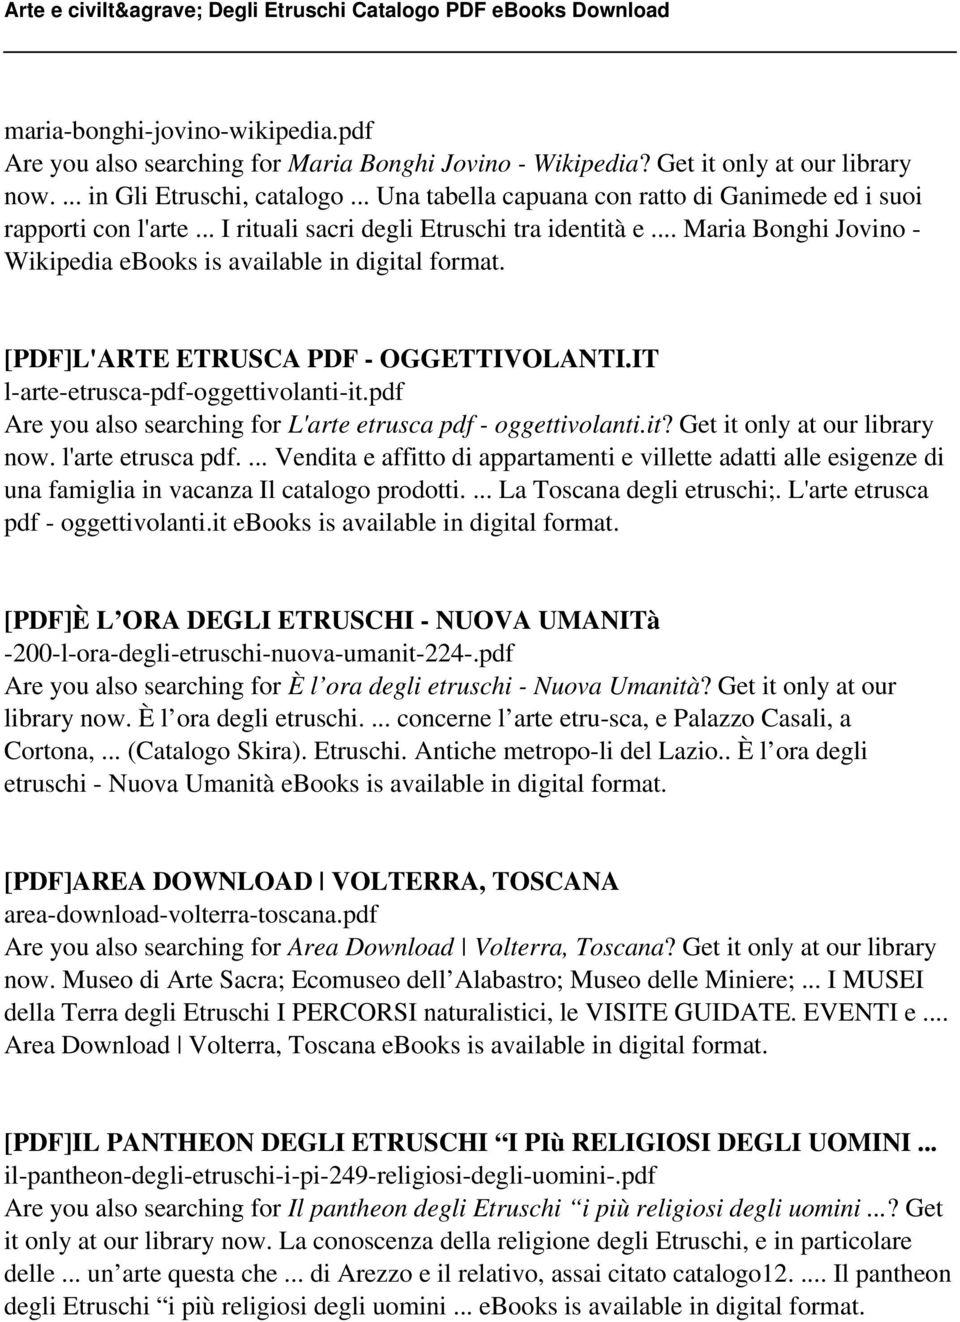 .. Maria Bonghi Jovino - Wikipedia ebooks is [PDF]L'ARTE ETRUSCA PDF - OGGETTIVOLANTI.IT l-arte-etrusca-pdf-oggettivolanti-it.pdf Are you also searching for L'arte etrusca pdf - oggettivolanti.it? Get it only at our library now.